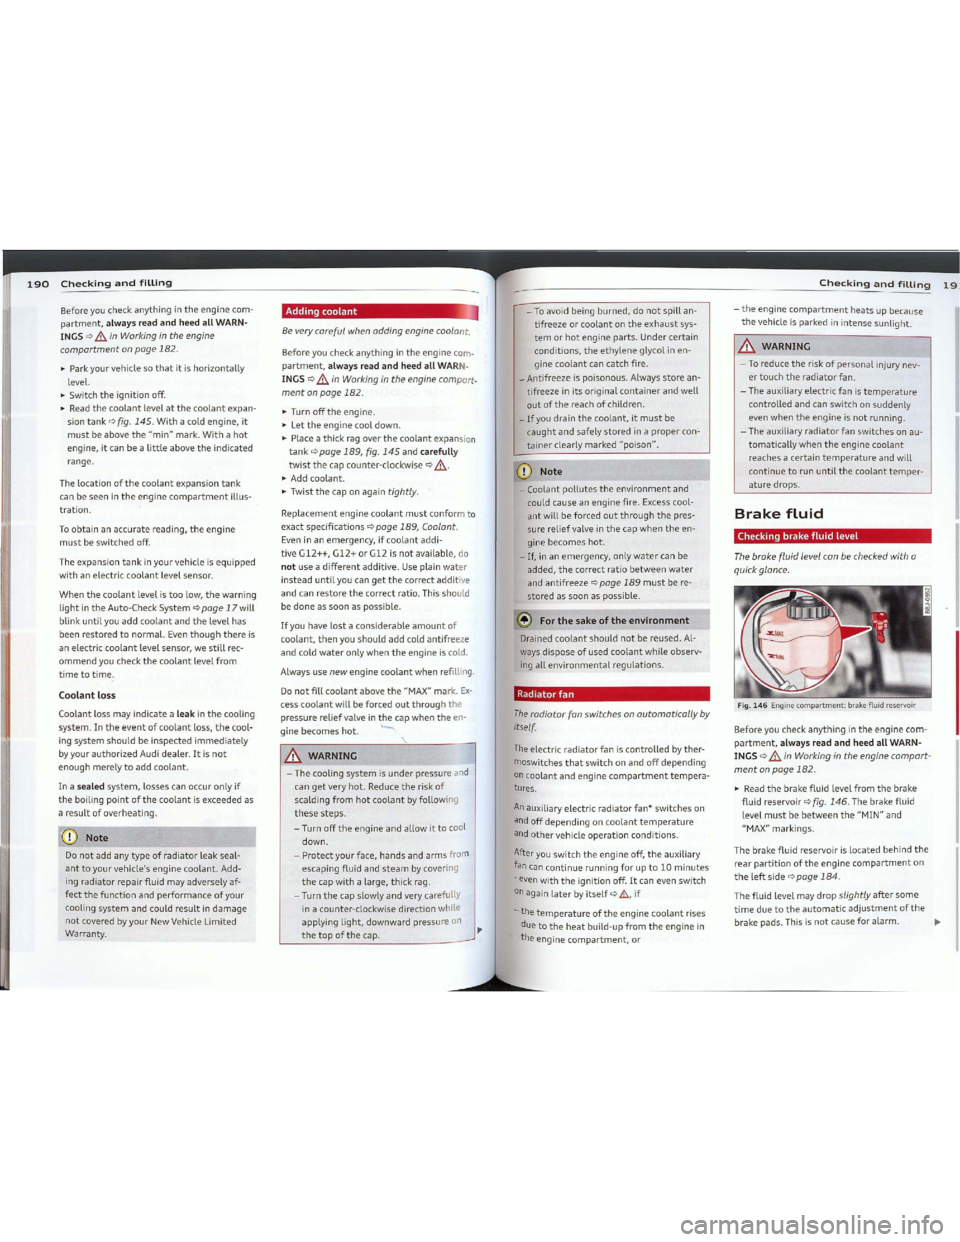 AUDI TT 2012  Owners Manual Downloaded from www.Manualslib.com manuals search engine CheckingbrakefLuidLeveL
Beforeyoucheckanythingintheenginecom­
partment,aLwaysreadandheedailWARN­
INGS
q.&.inWorkingintheengine compart­
ment